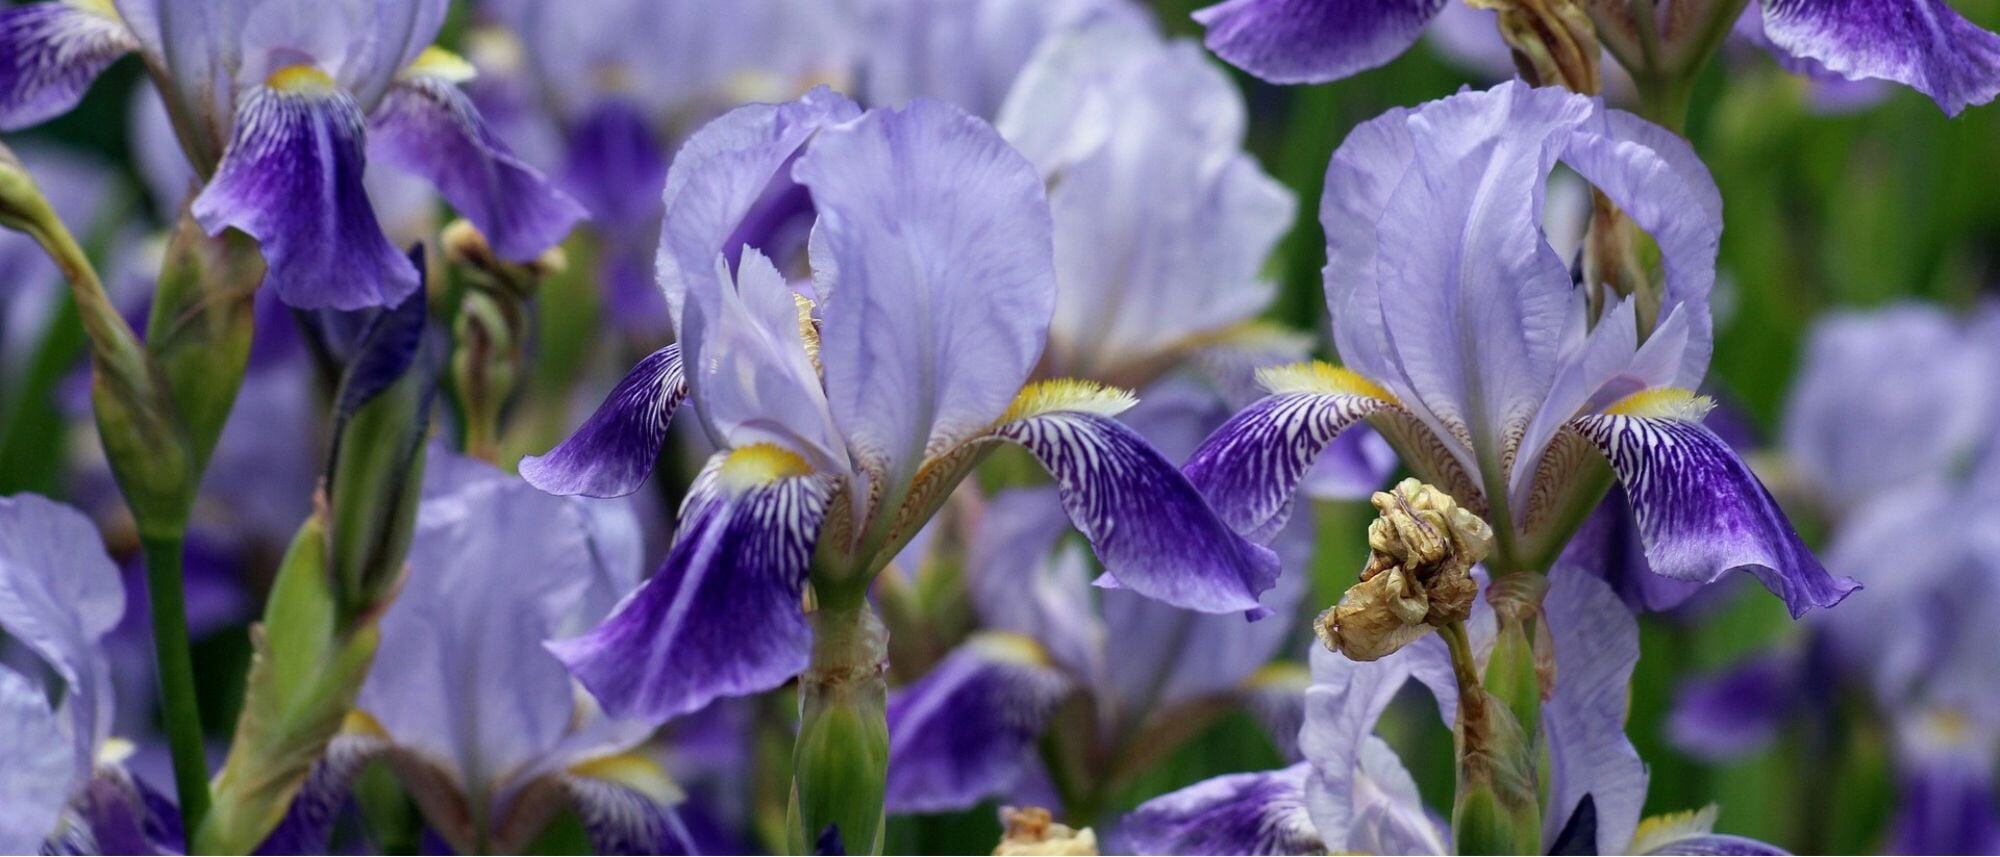 Vibrant blue iris flowers home gardening